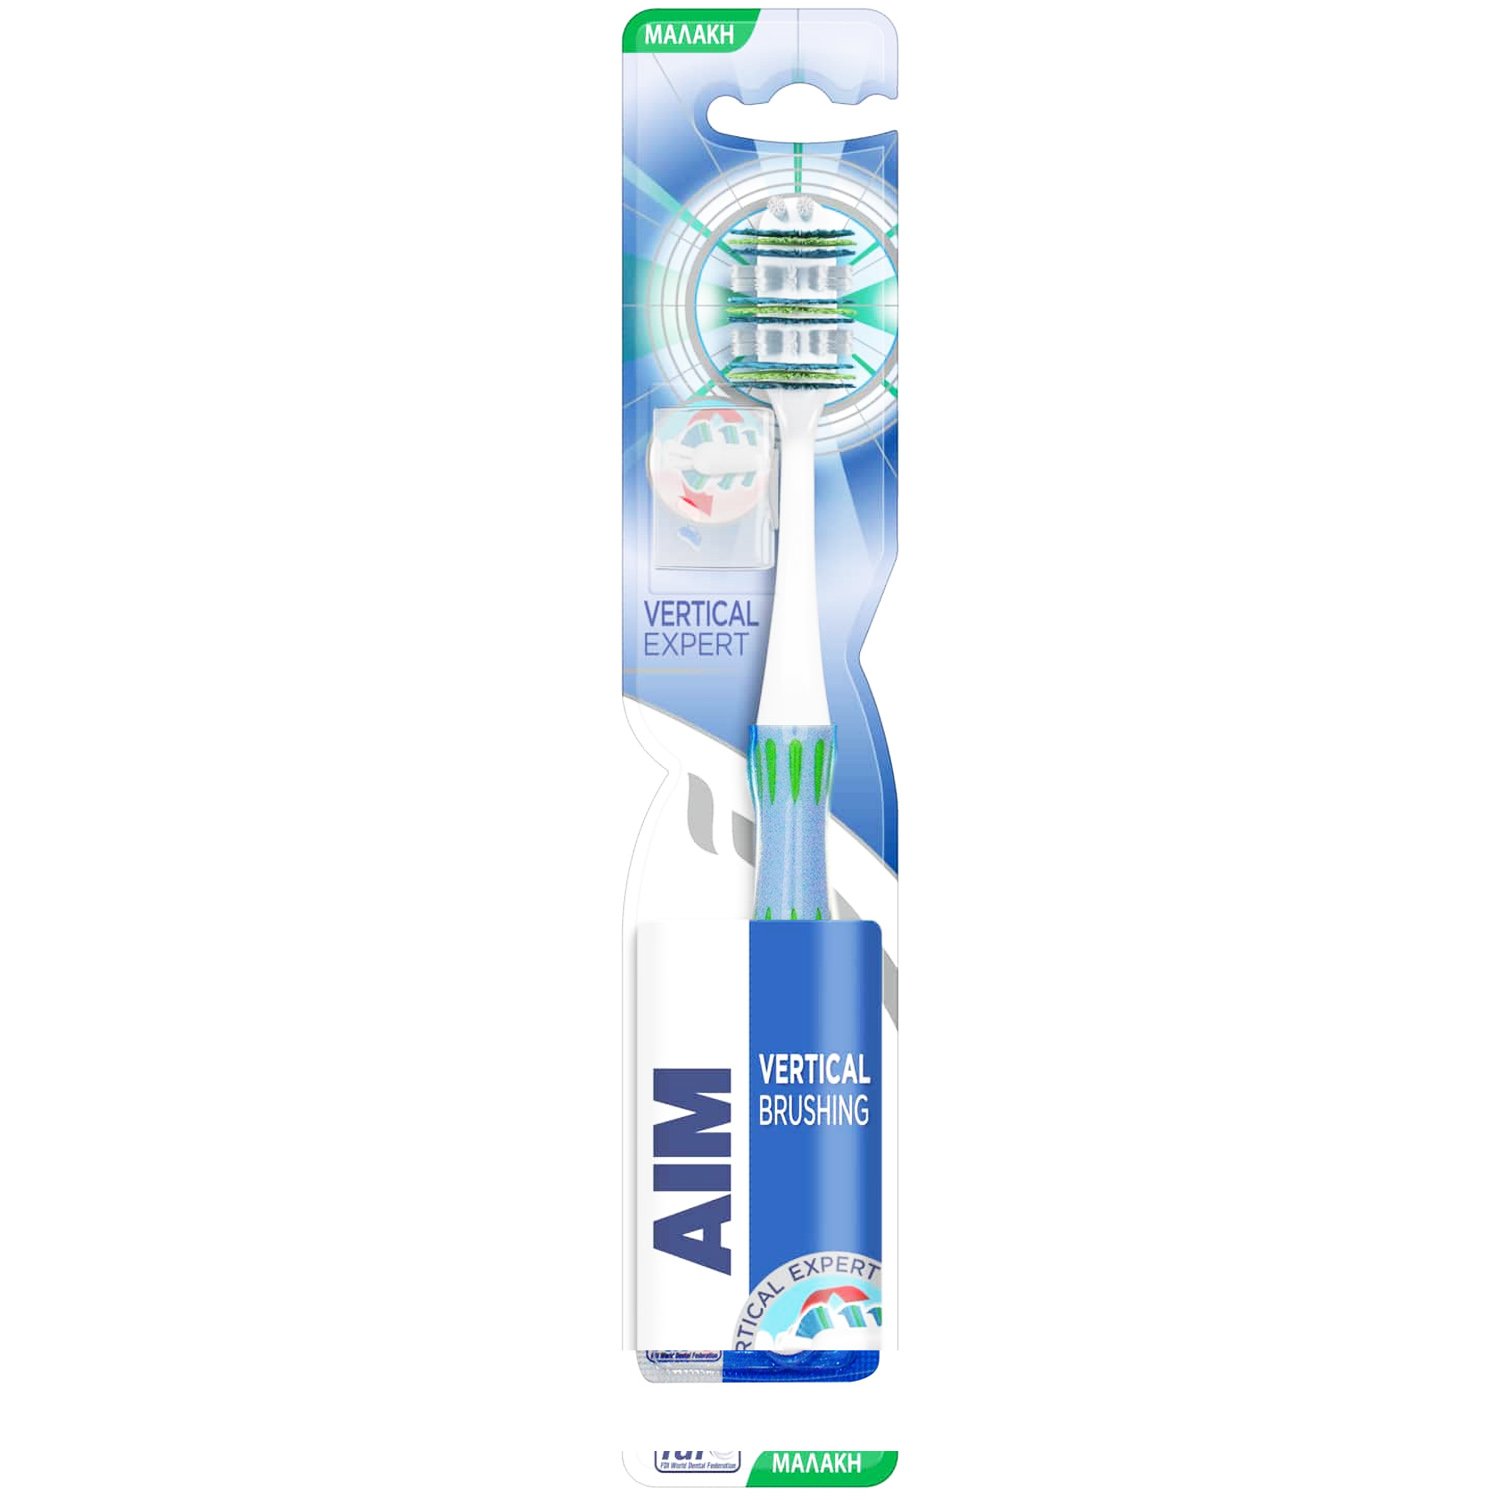 Aim Vertical Expert Toothbrush Soft Μαλακή Οδοντόβουρτσα με Θυσάνους σε Σχήμα Βεντάλιας 1 Τεμάχιο – Γαλάζιο